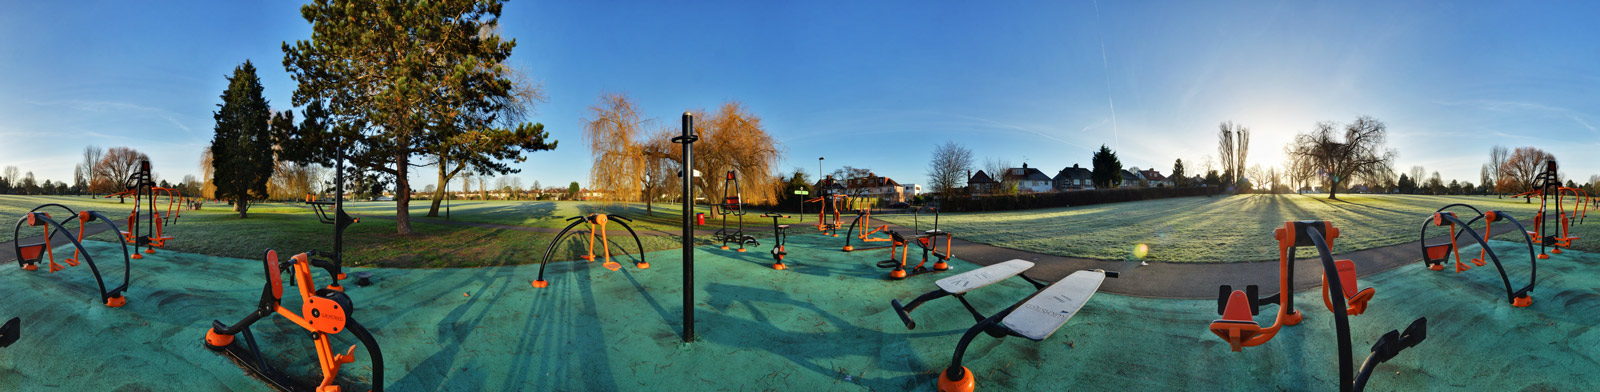 20161227_brent_preston_park-exercise-area